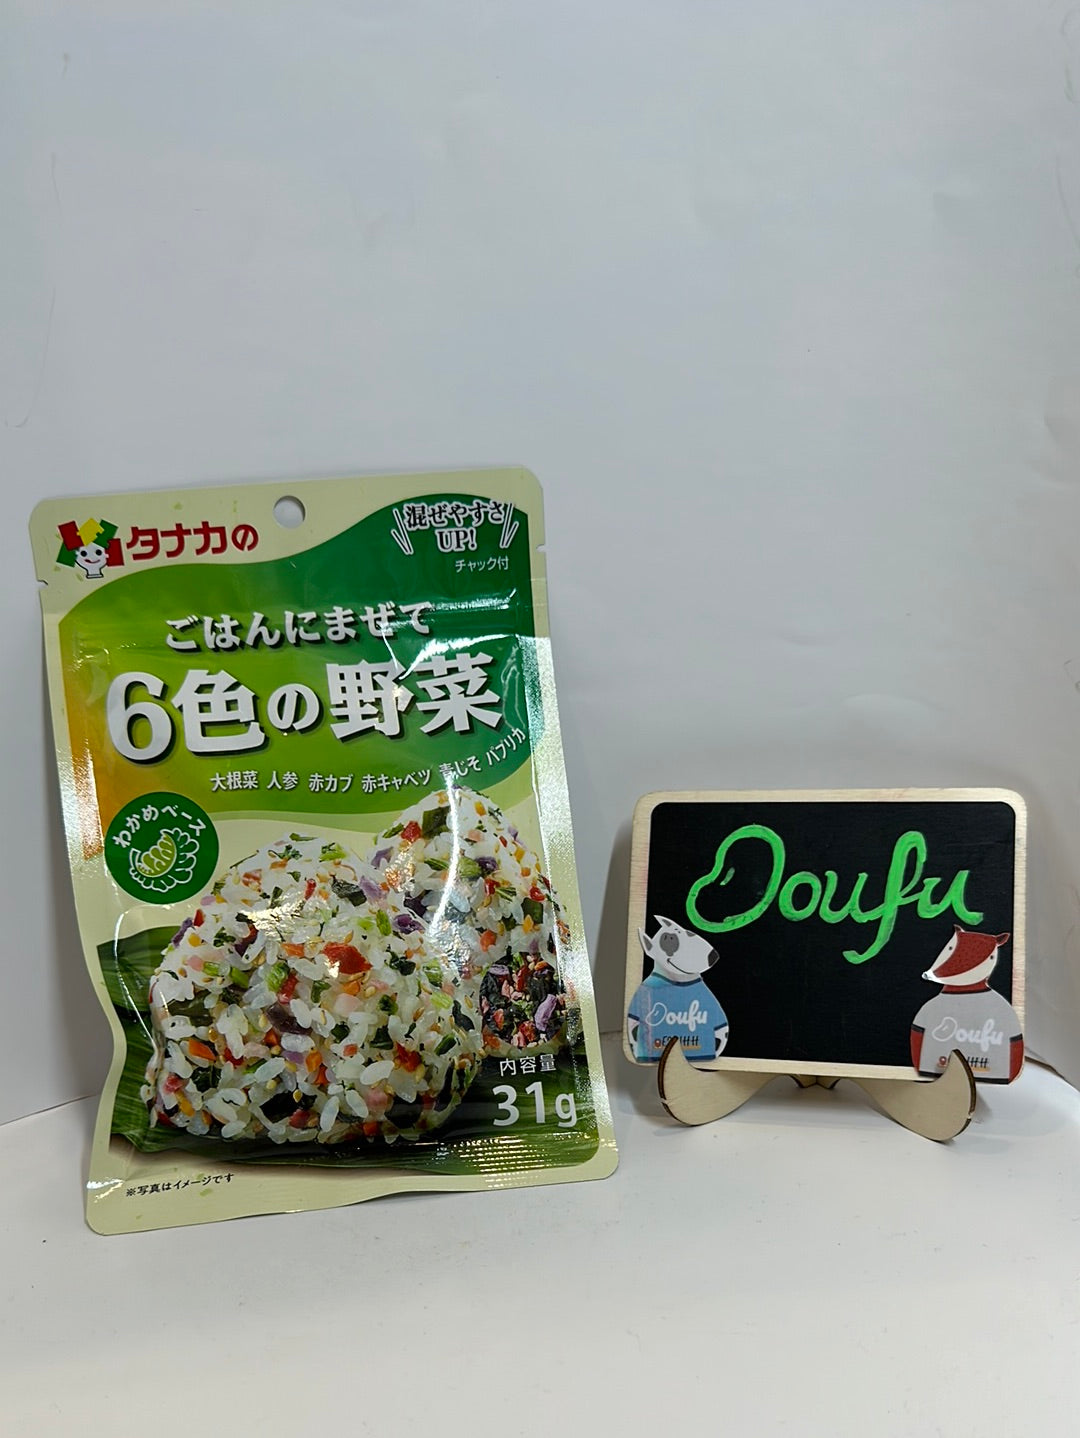 Rice seasoning 6色野菜 31g